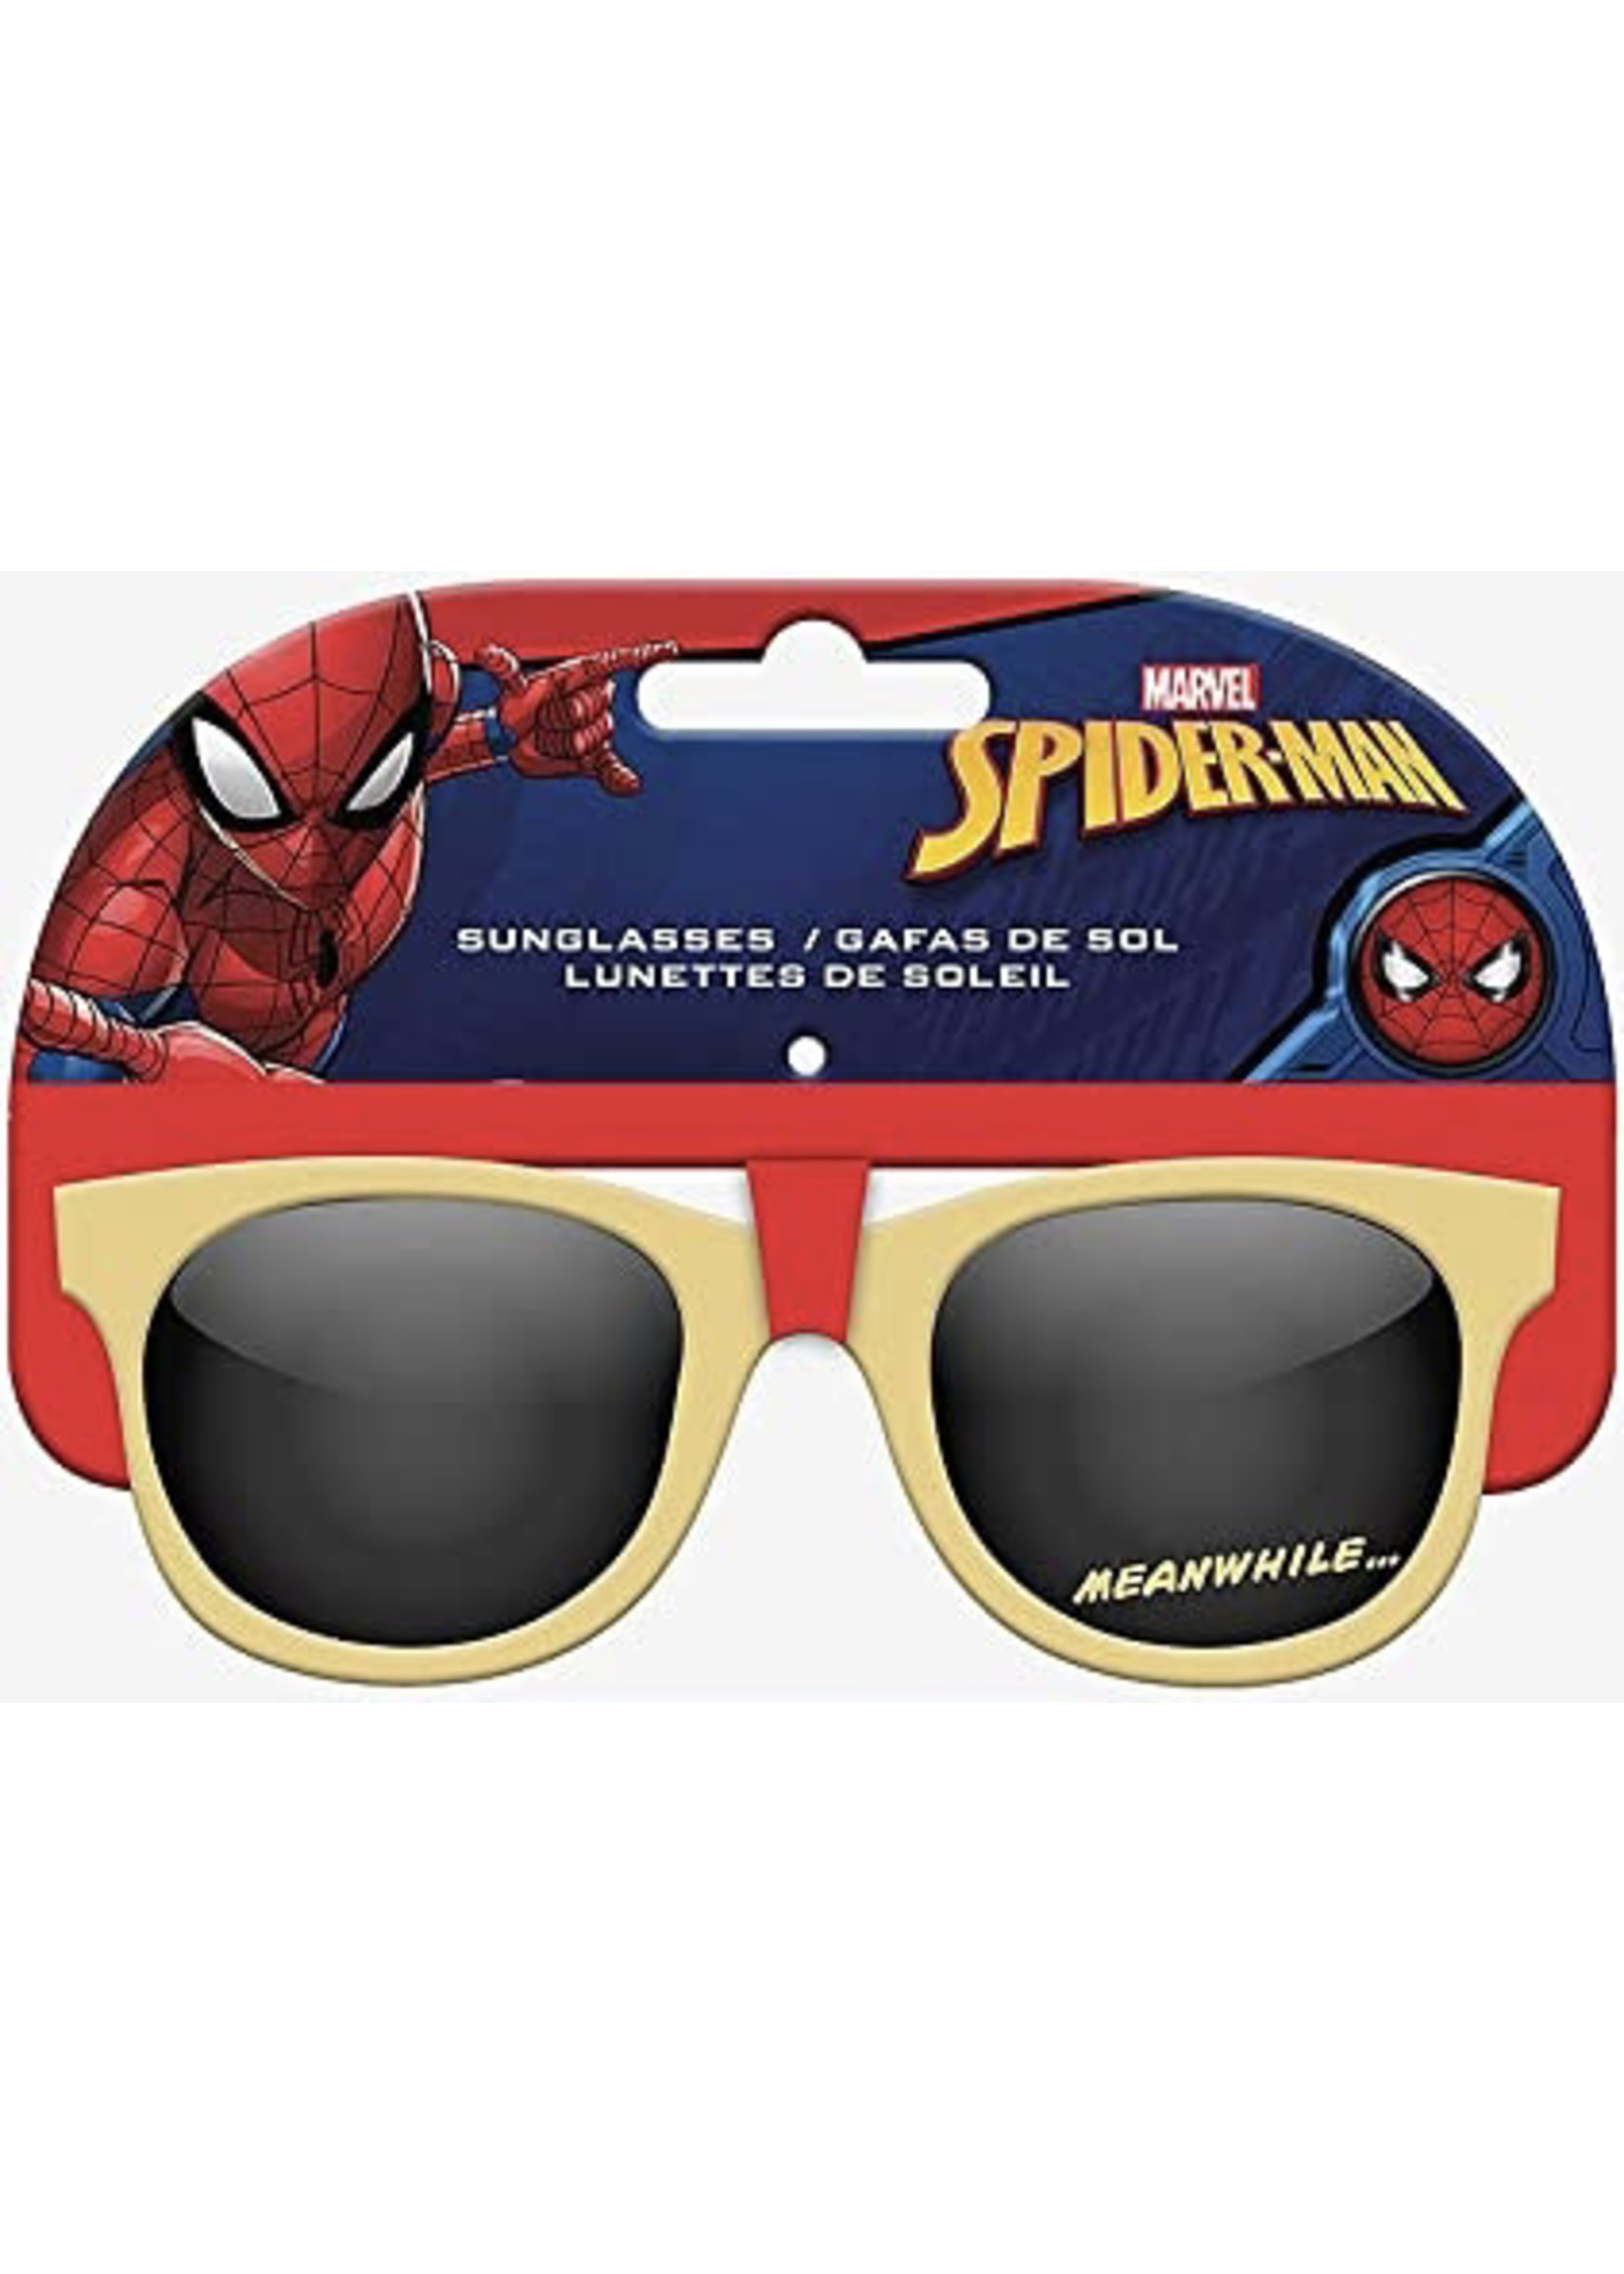 Marvel Spiderman zonnebril van Marvel geel